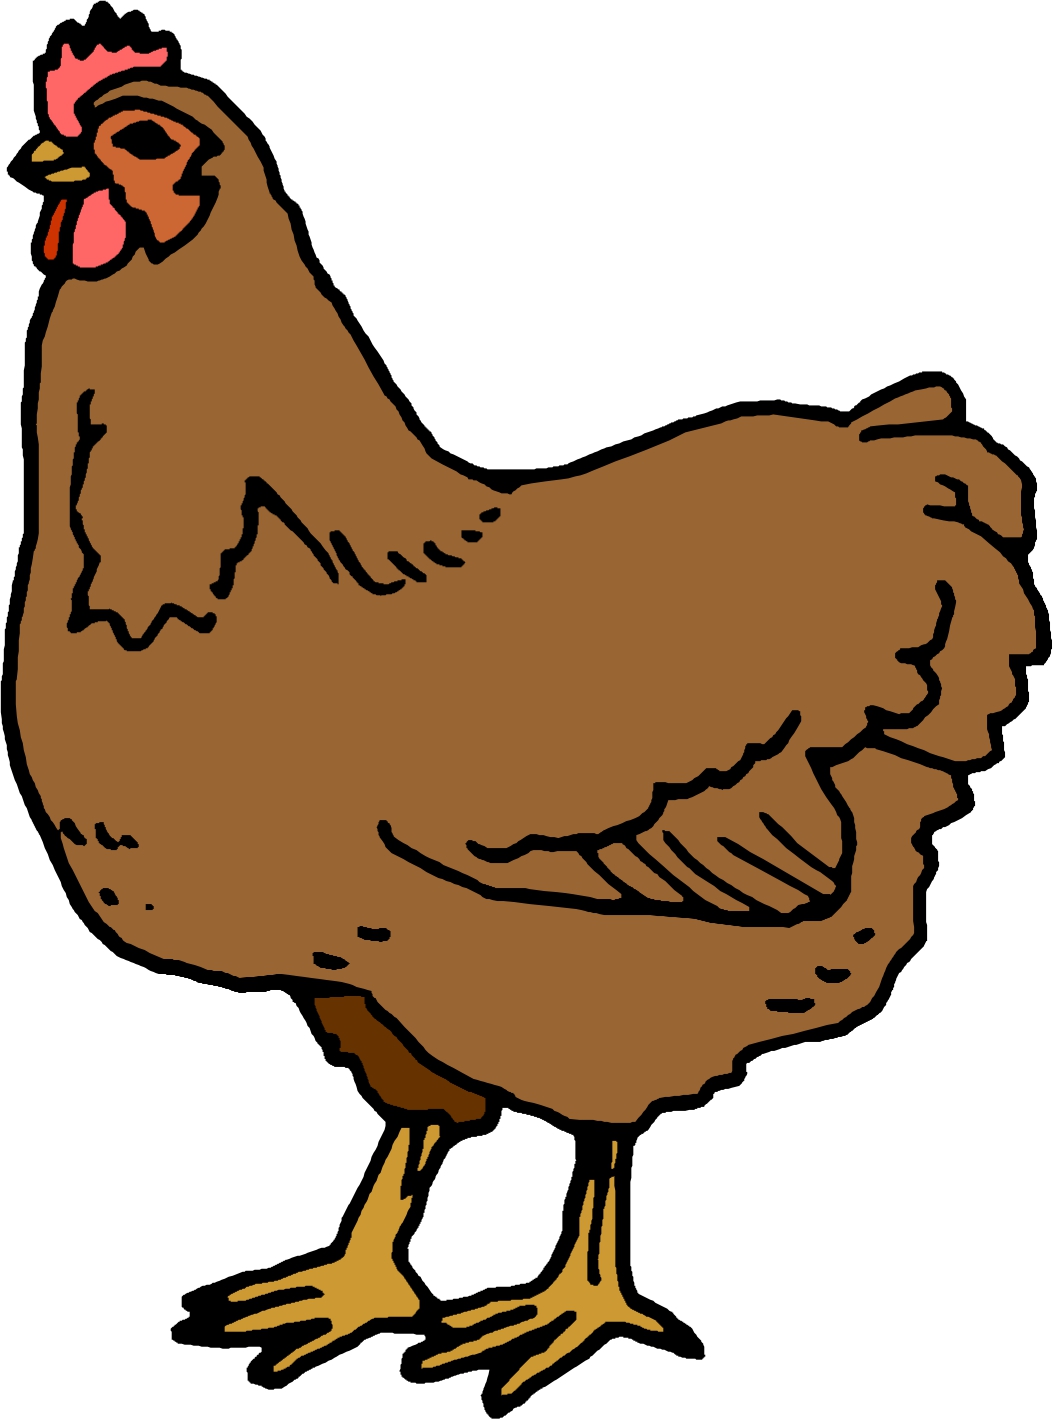 Cartoon Chicken Image 